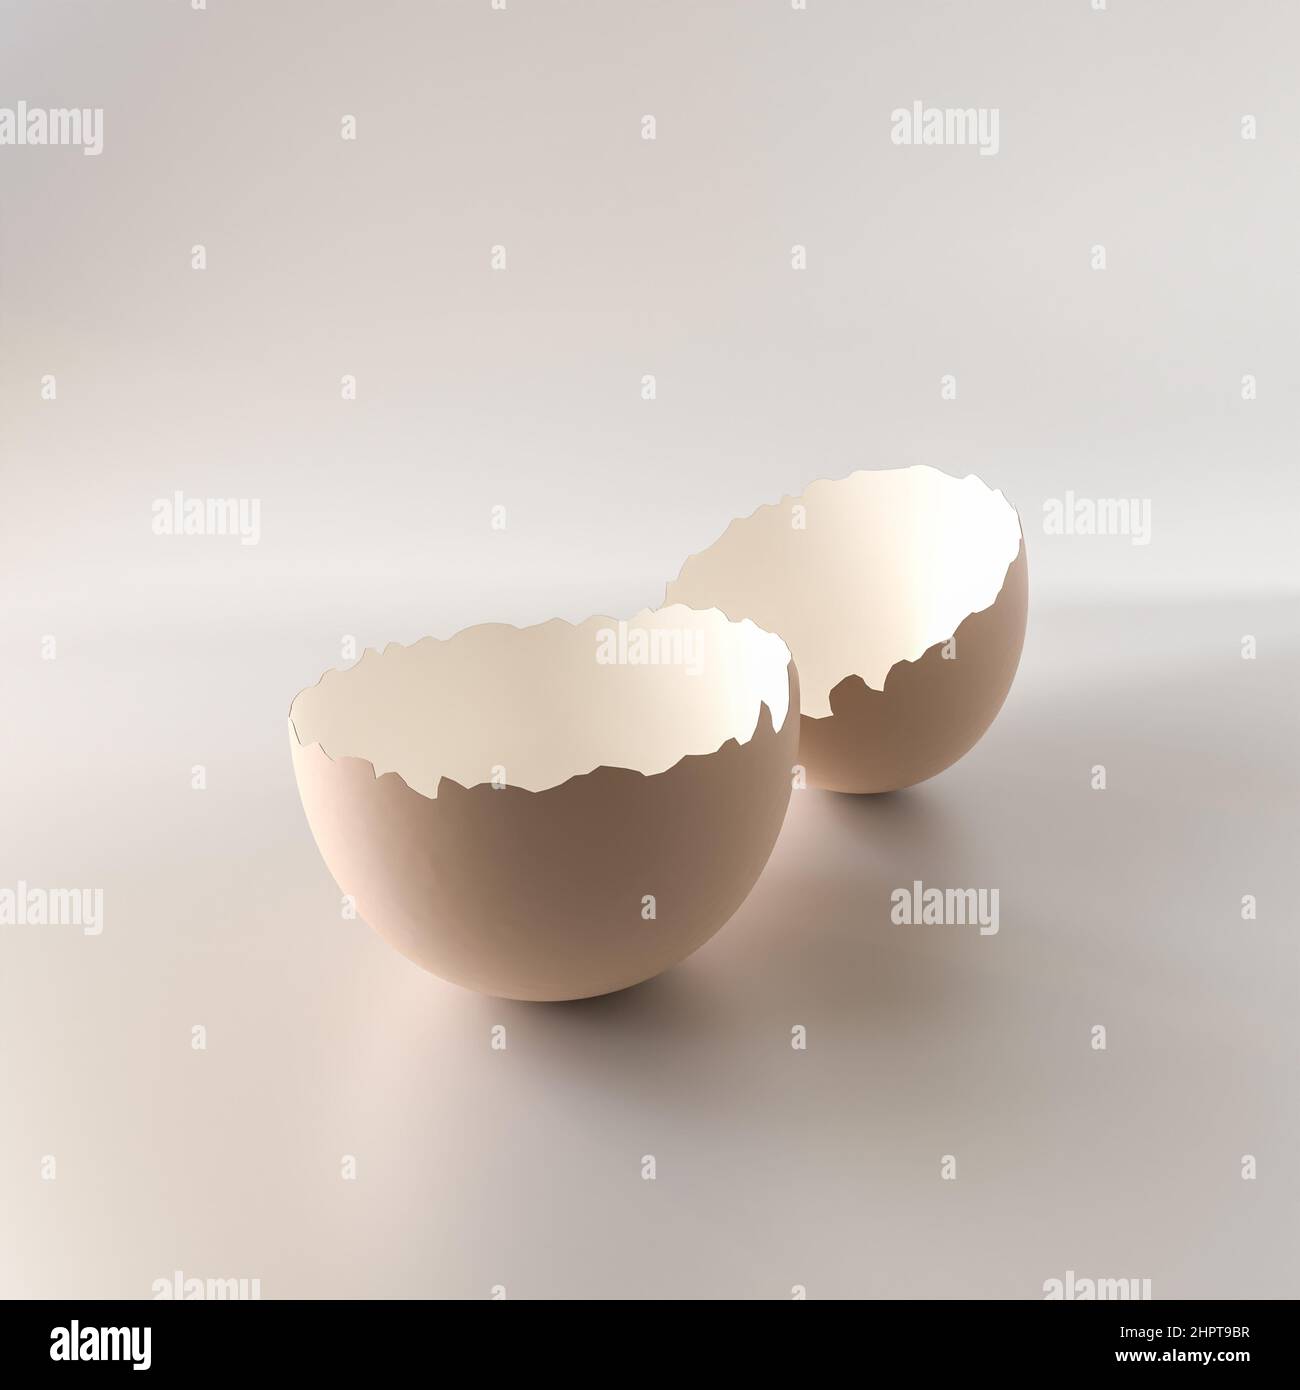 A broken egg template. Concept for easter surprises. Stock Photo